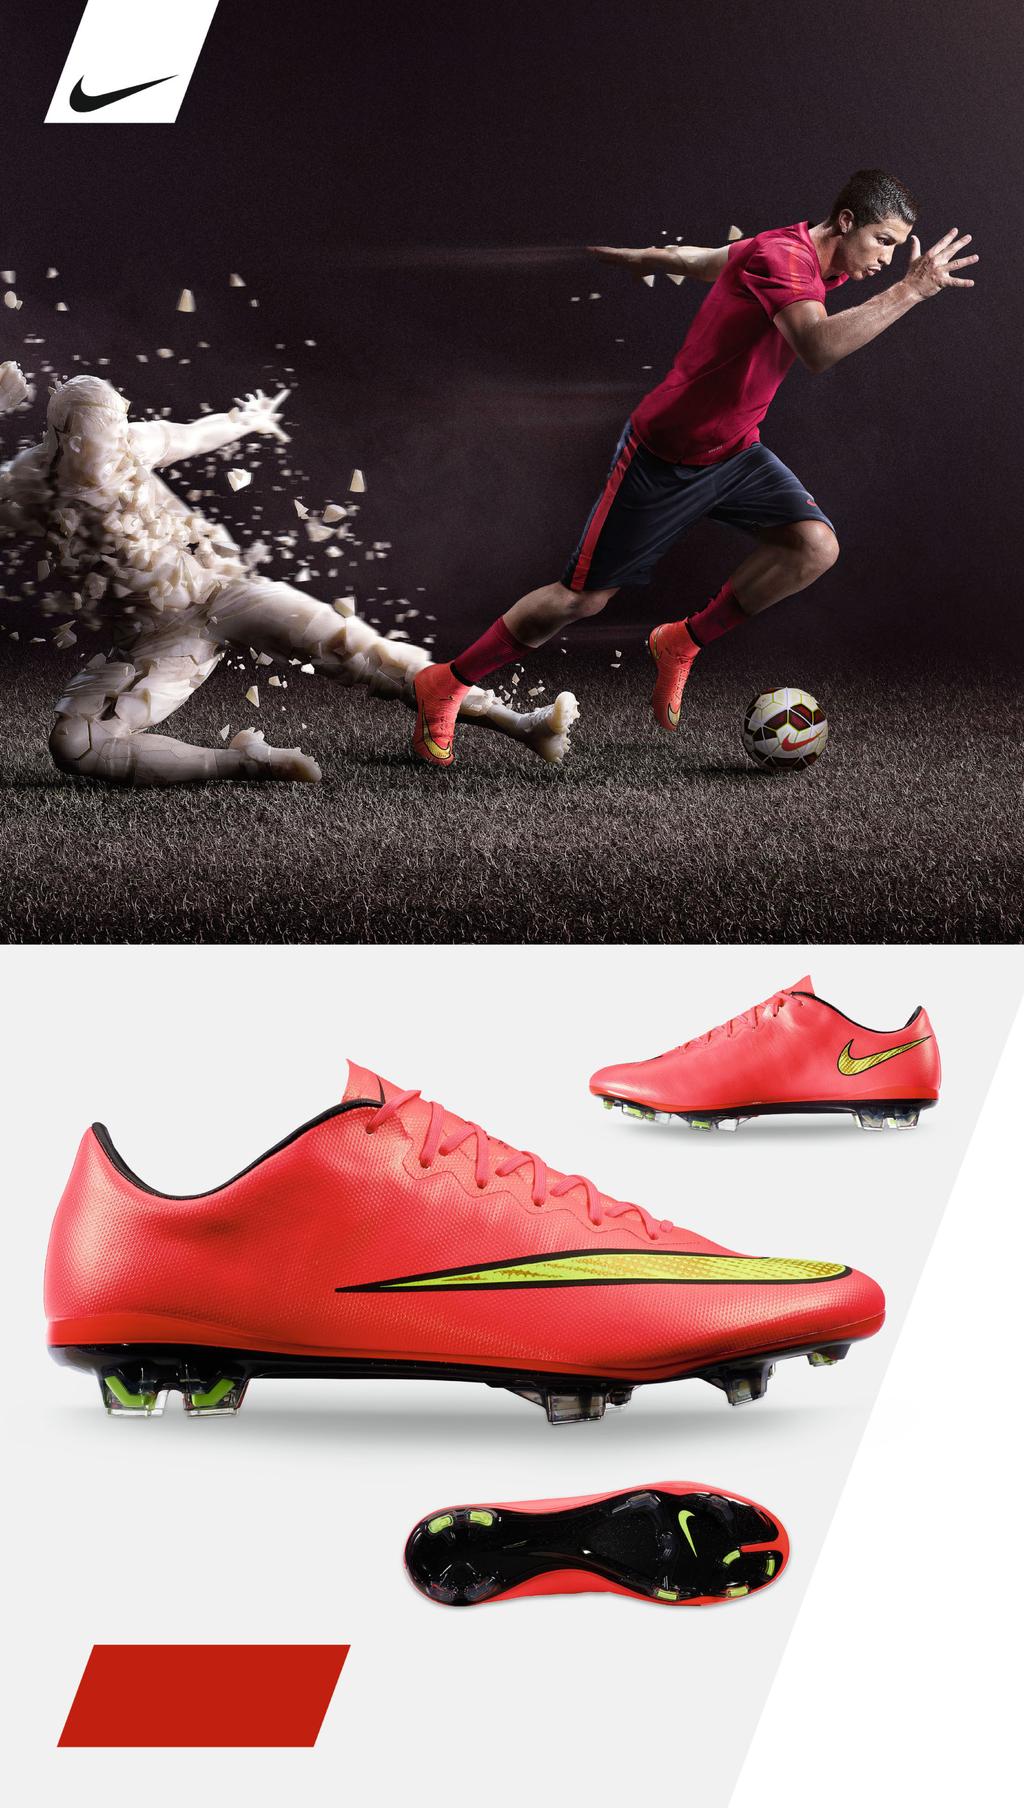 Cristiano Ronaldo Fußballschuh»Mercurial Vapor X FG«Obermaterial: Kombination aus Motionﬁt- und NikeSkin-Material, für